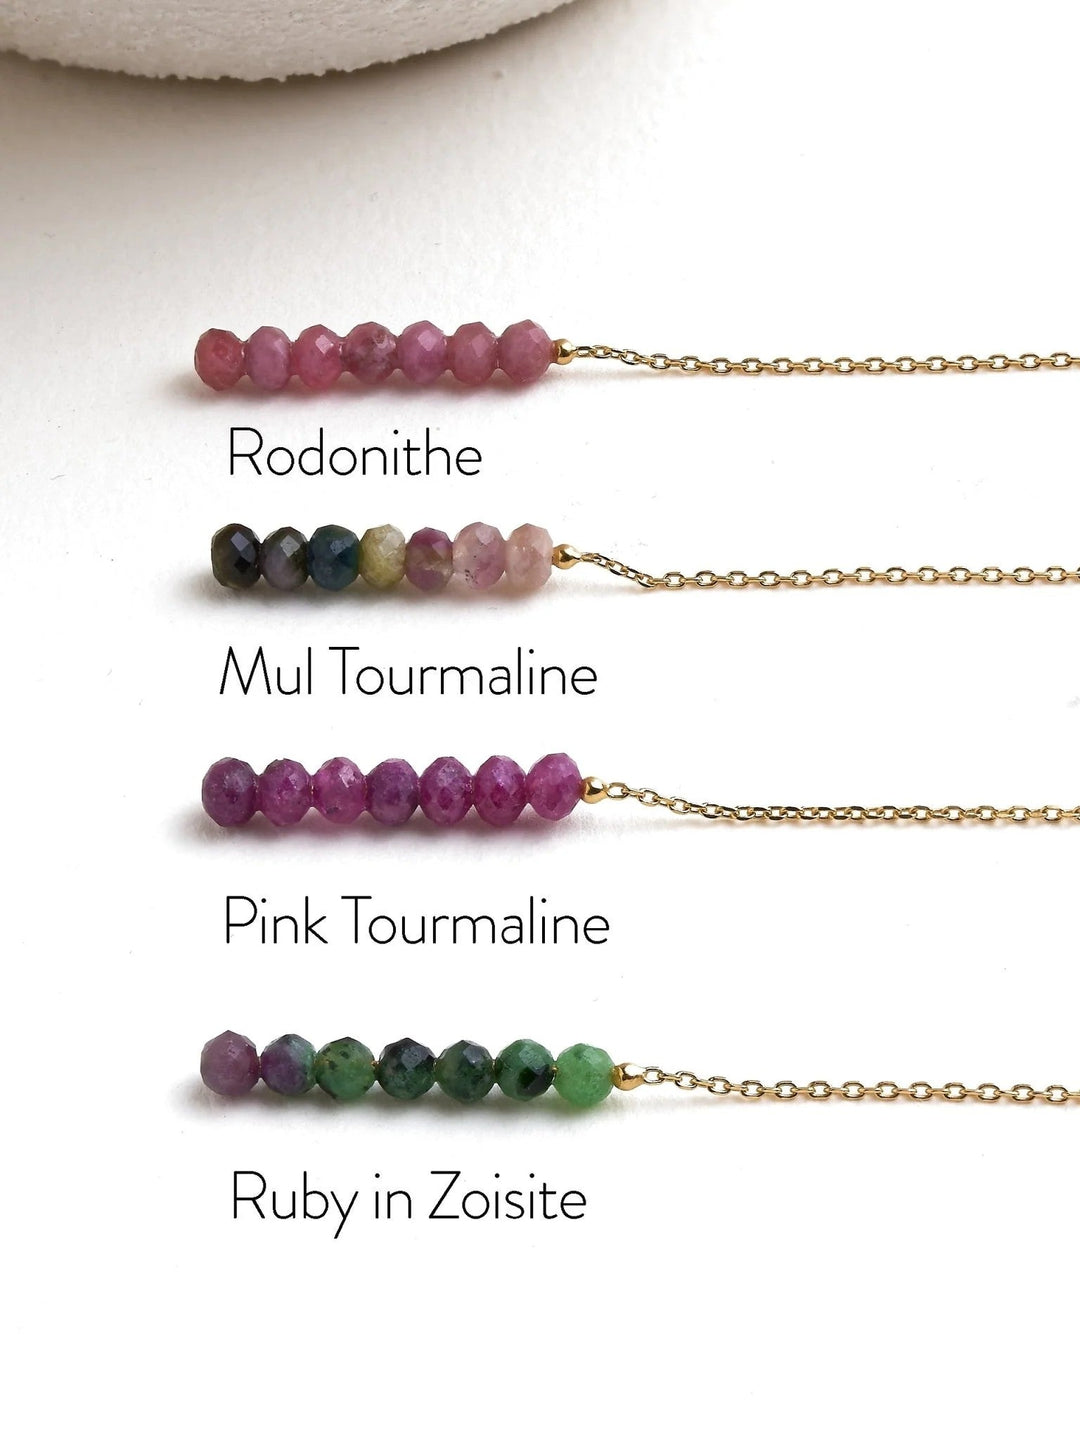 Luvia Stone Chain Earrings - 1. Rhodonite105MMchain earringscolorfull earringsLunai Jewelry